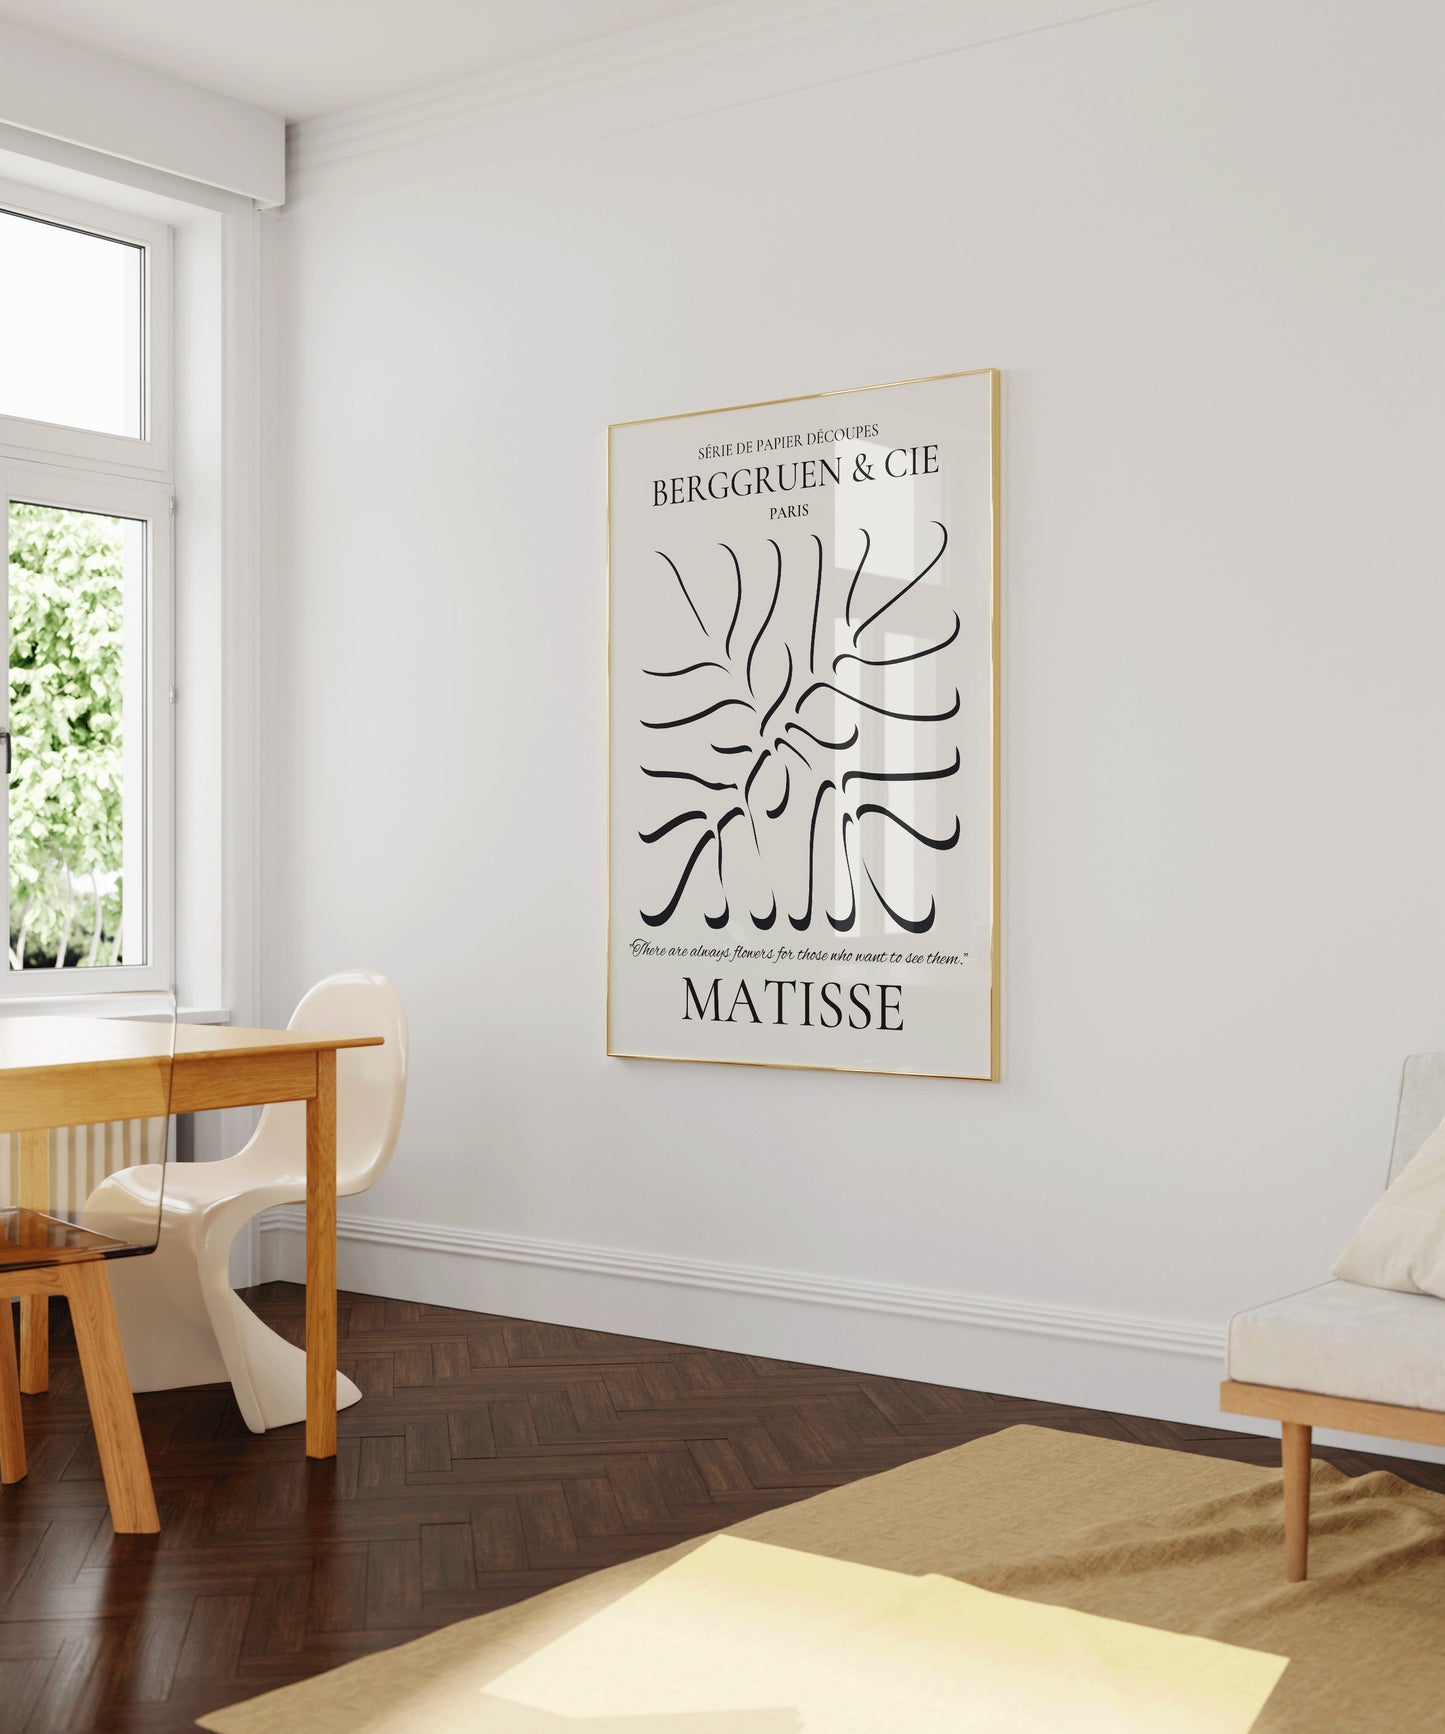 Henri Matisse Art Print Berggruen Cie Neutral Leaf Poster Cutouts Exhibition Vintage Papier Decoupes Framed Ready to Hang Home Office Decor